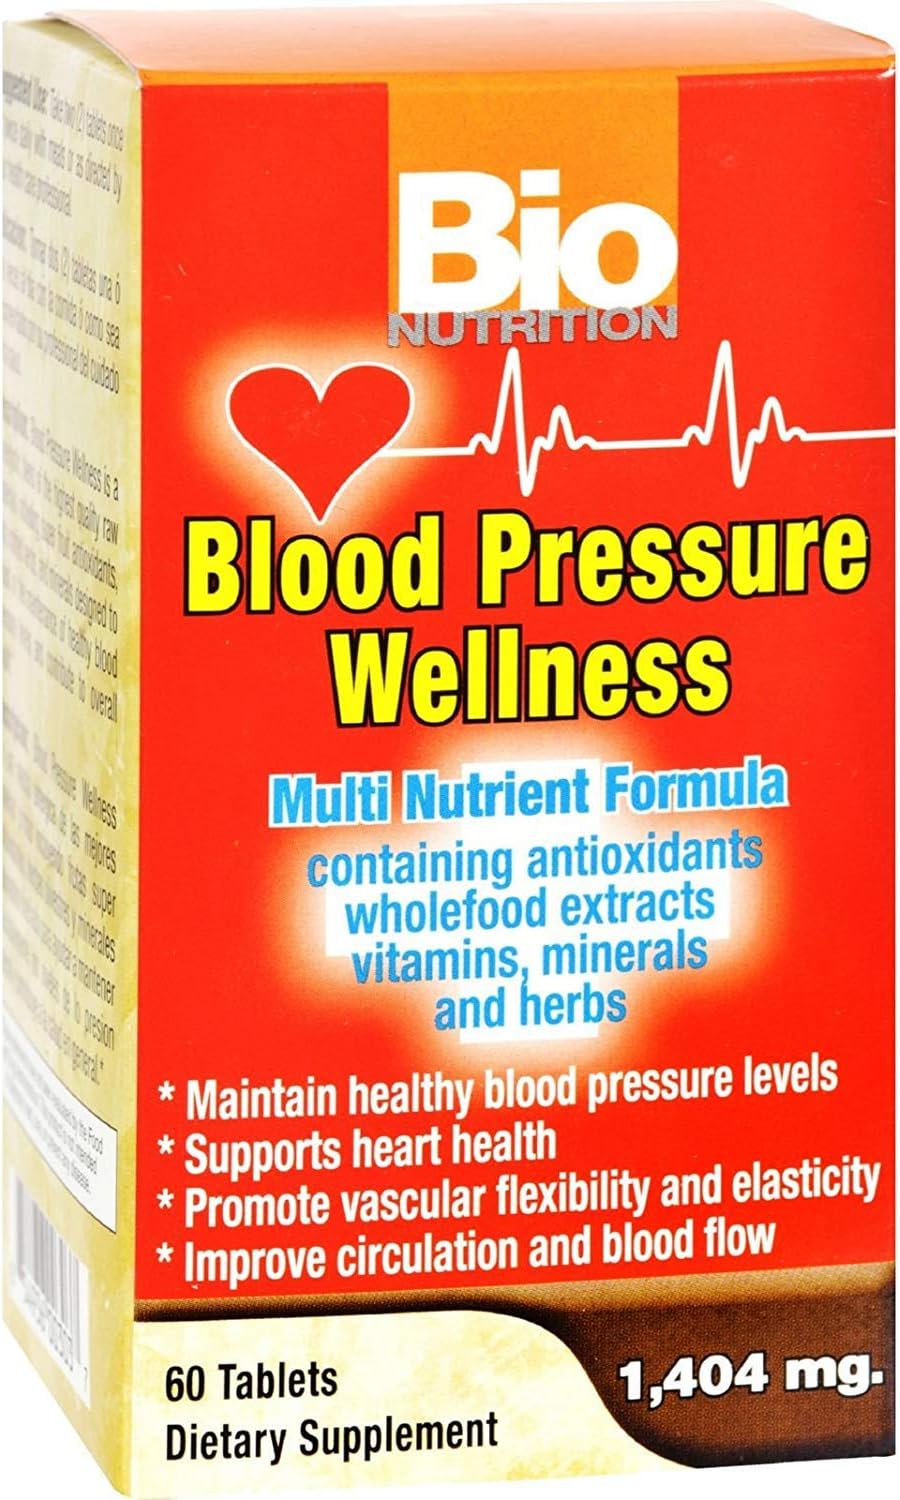 Bionutrition Blood Pressure Wellness (60 tablets)